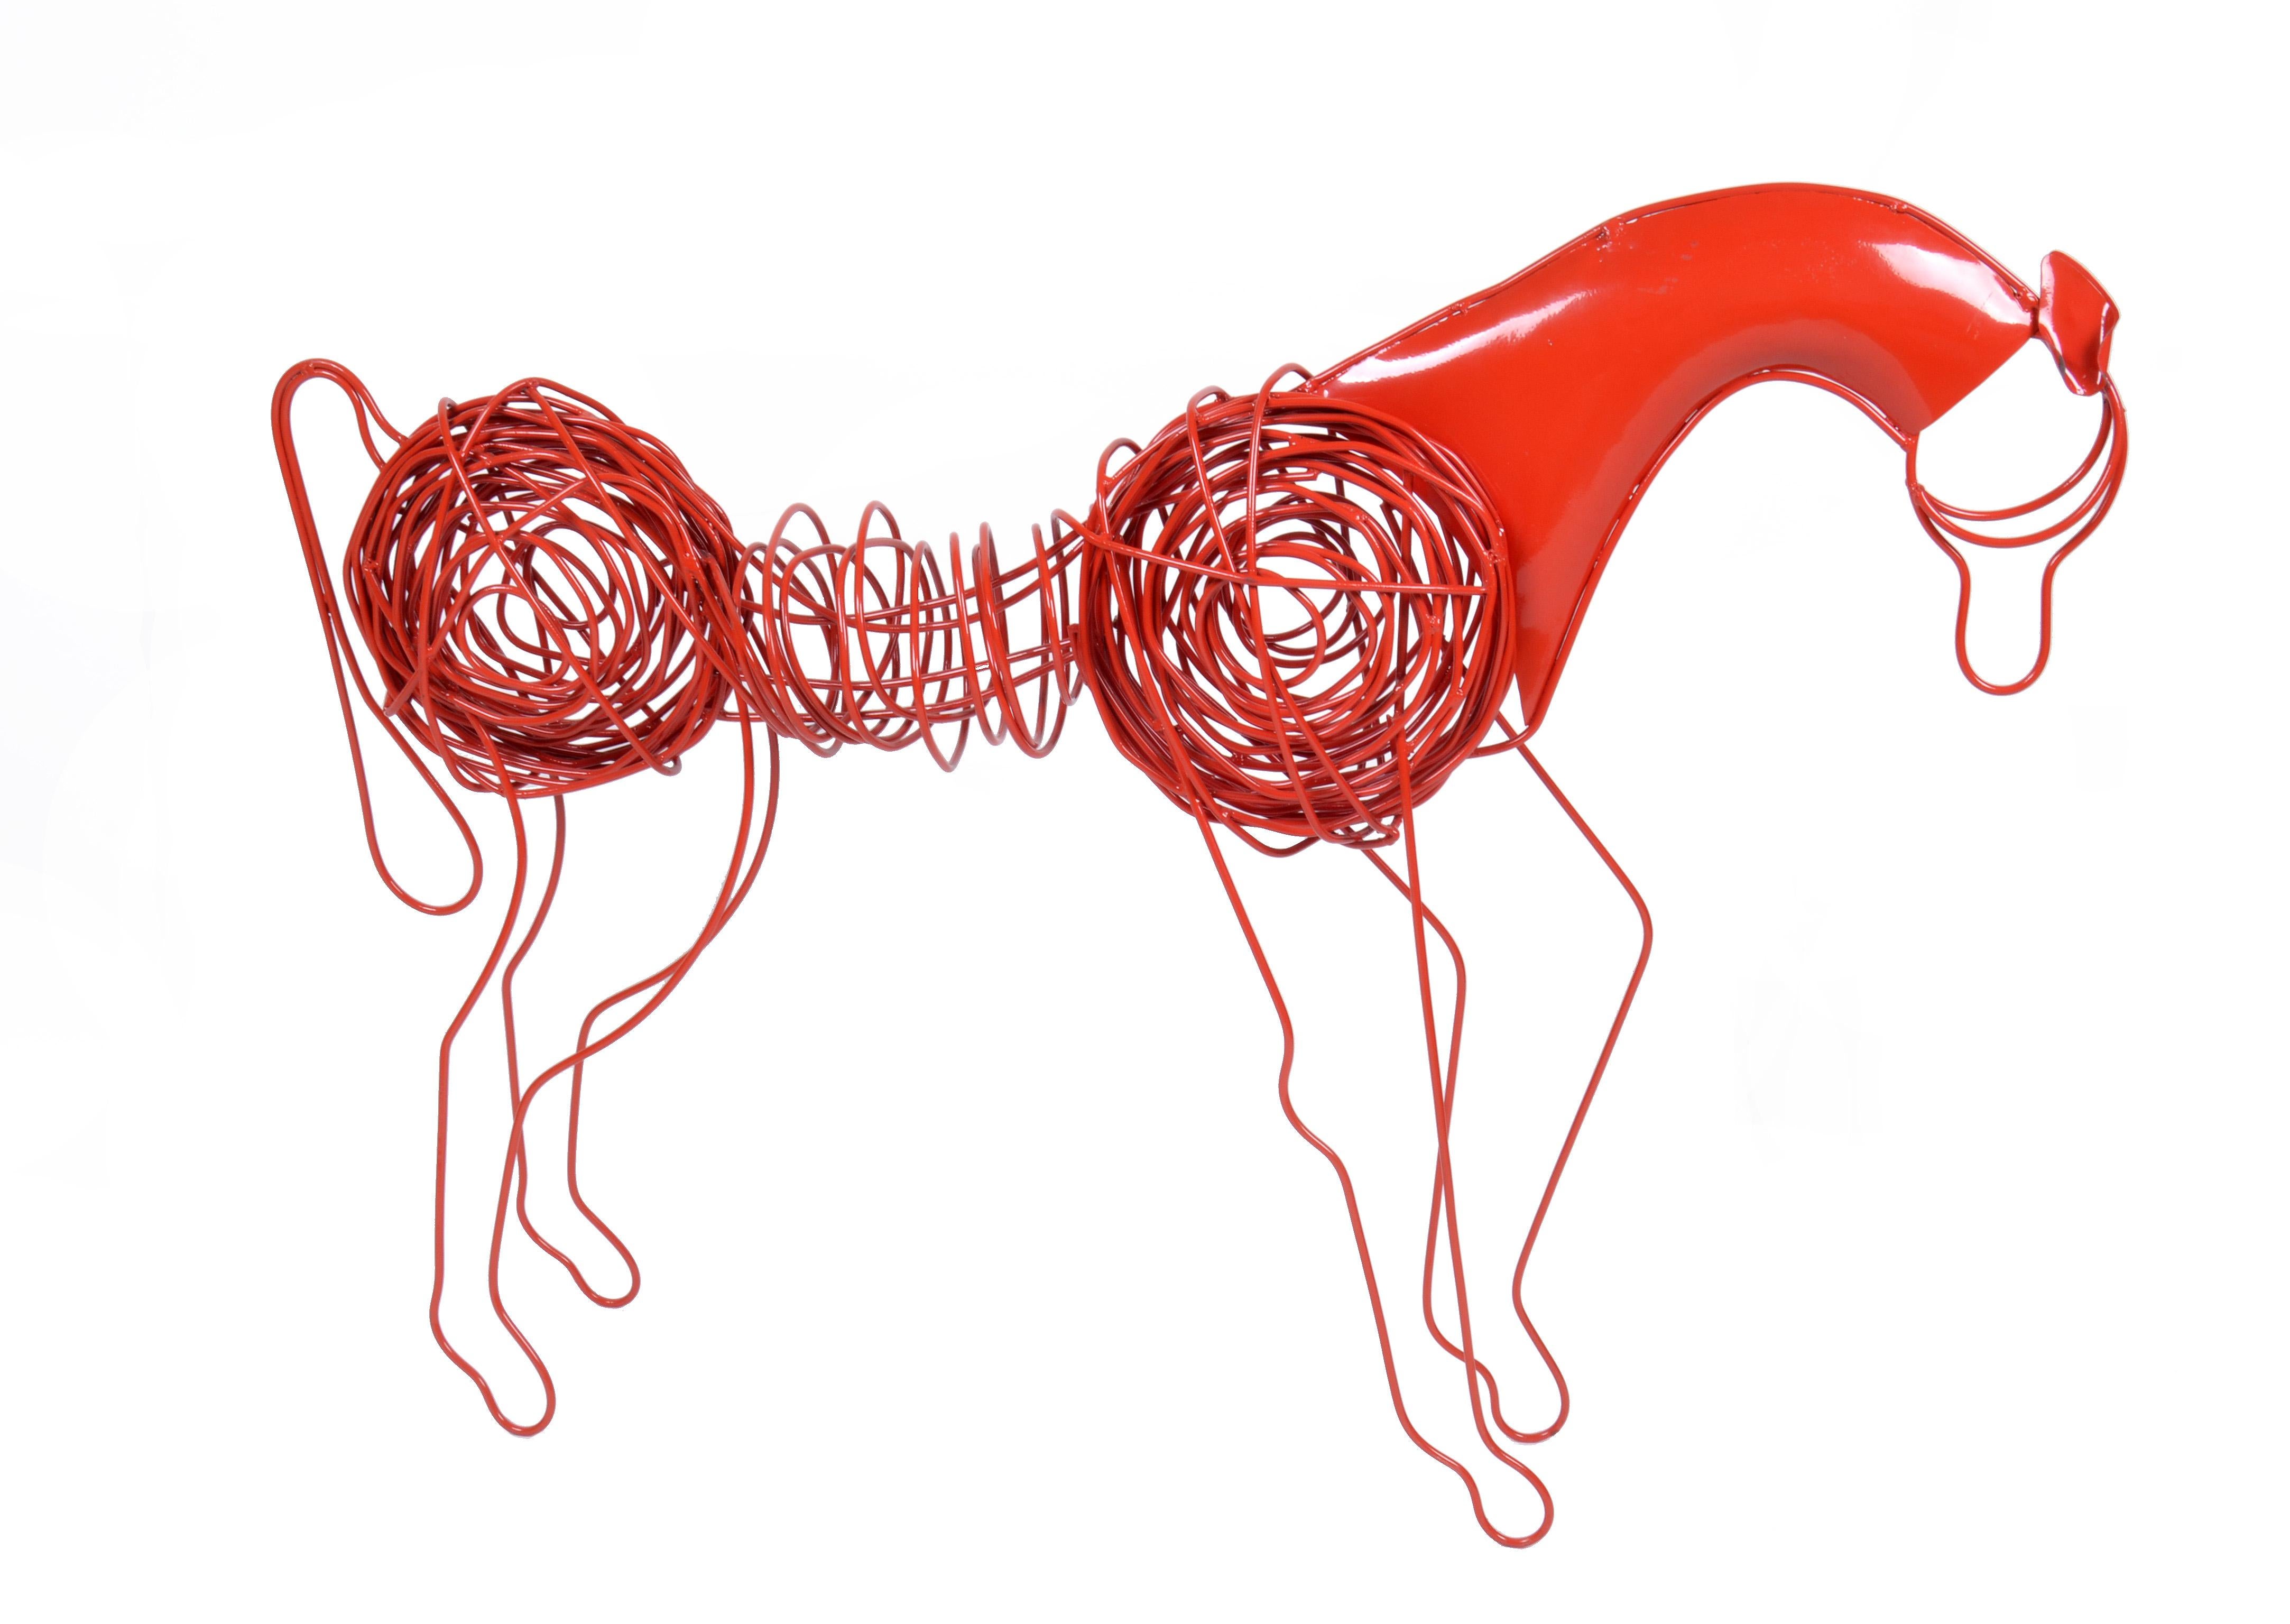 Huge Mid-Century Modern red wire horse sculpture.